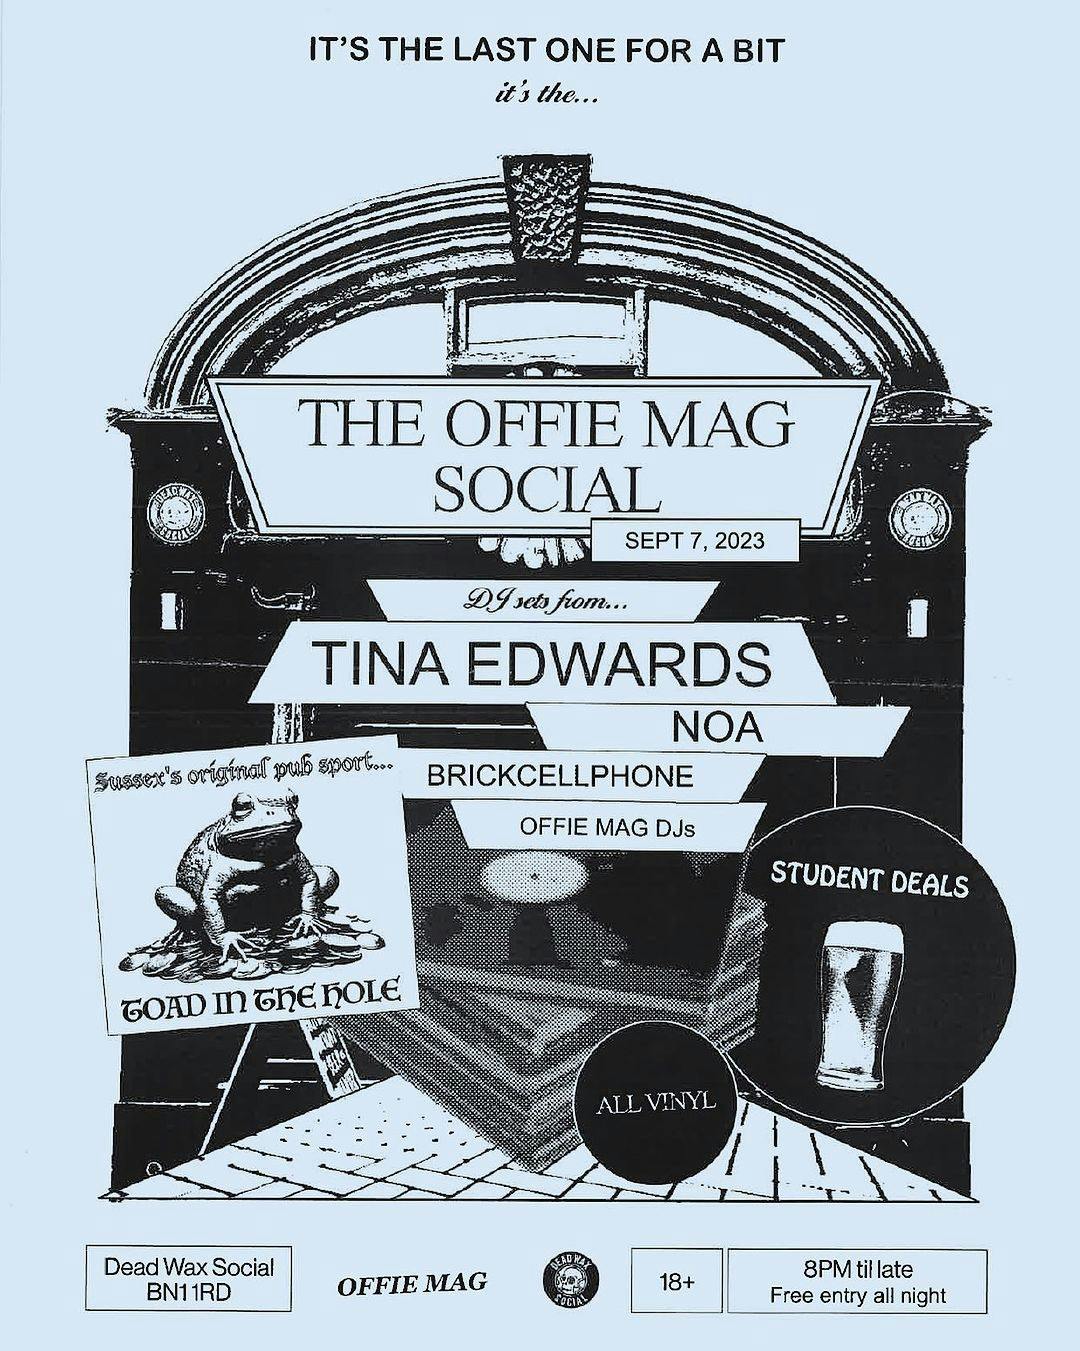 OFFIE MAG SOCIAL w/ Tina Edwards, NOA & Brickcellphone